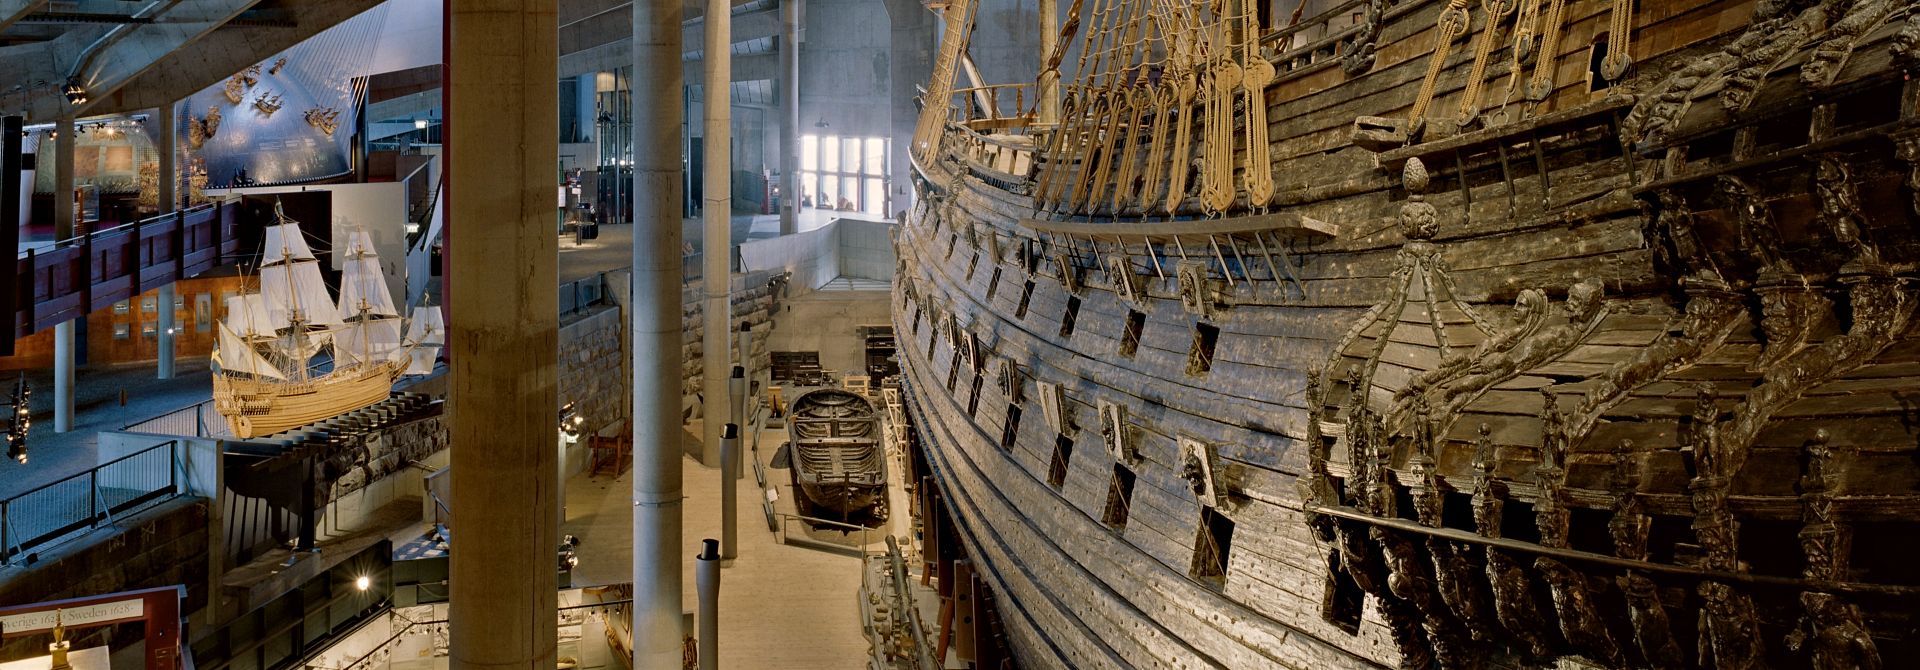 Stockholm Vasa Museum Hero